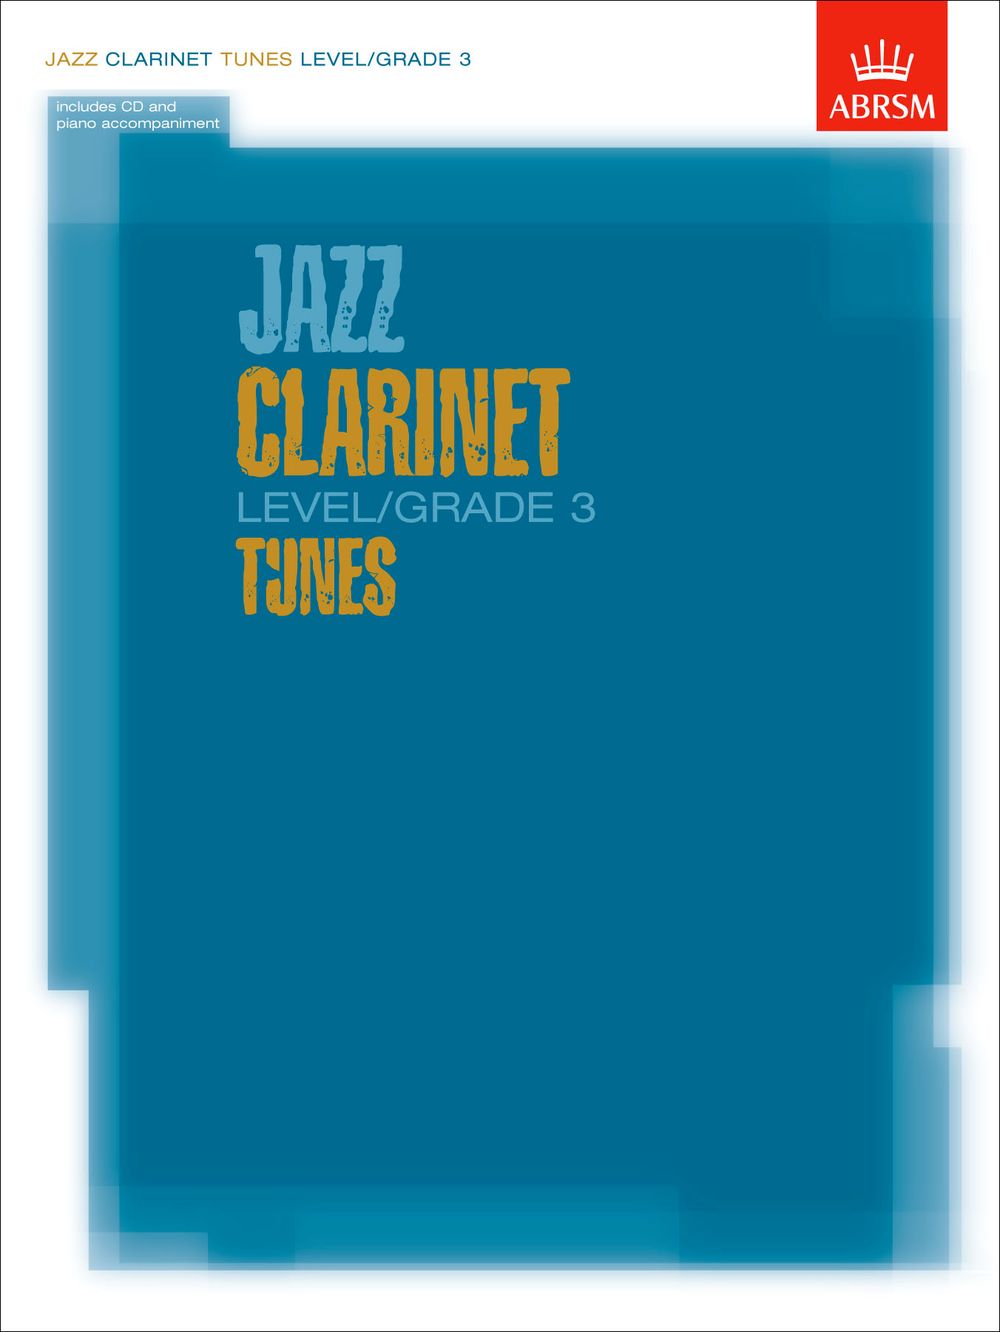 Jazz Clarinet Level/Grade 3 Tunes: Clarinet: Instrumental Album